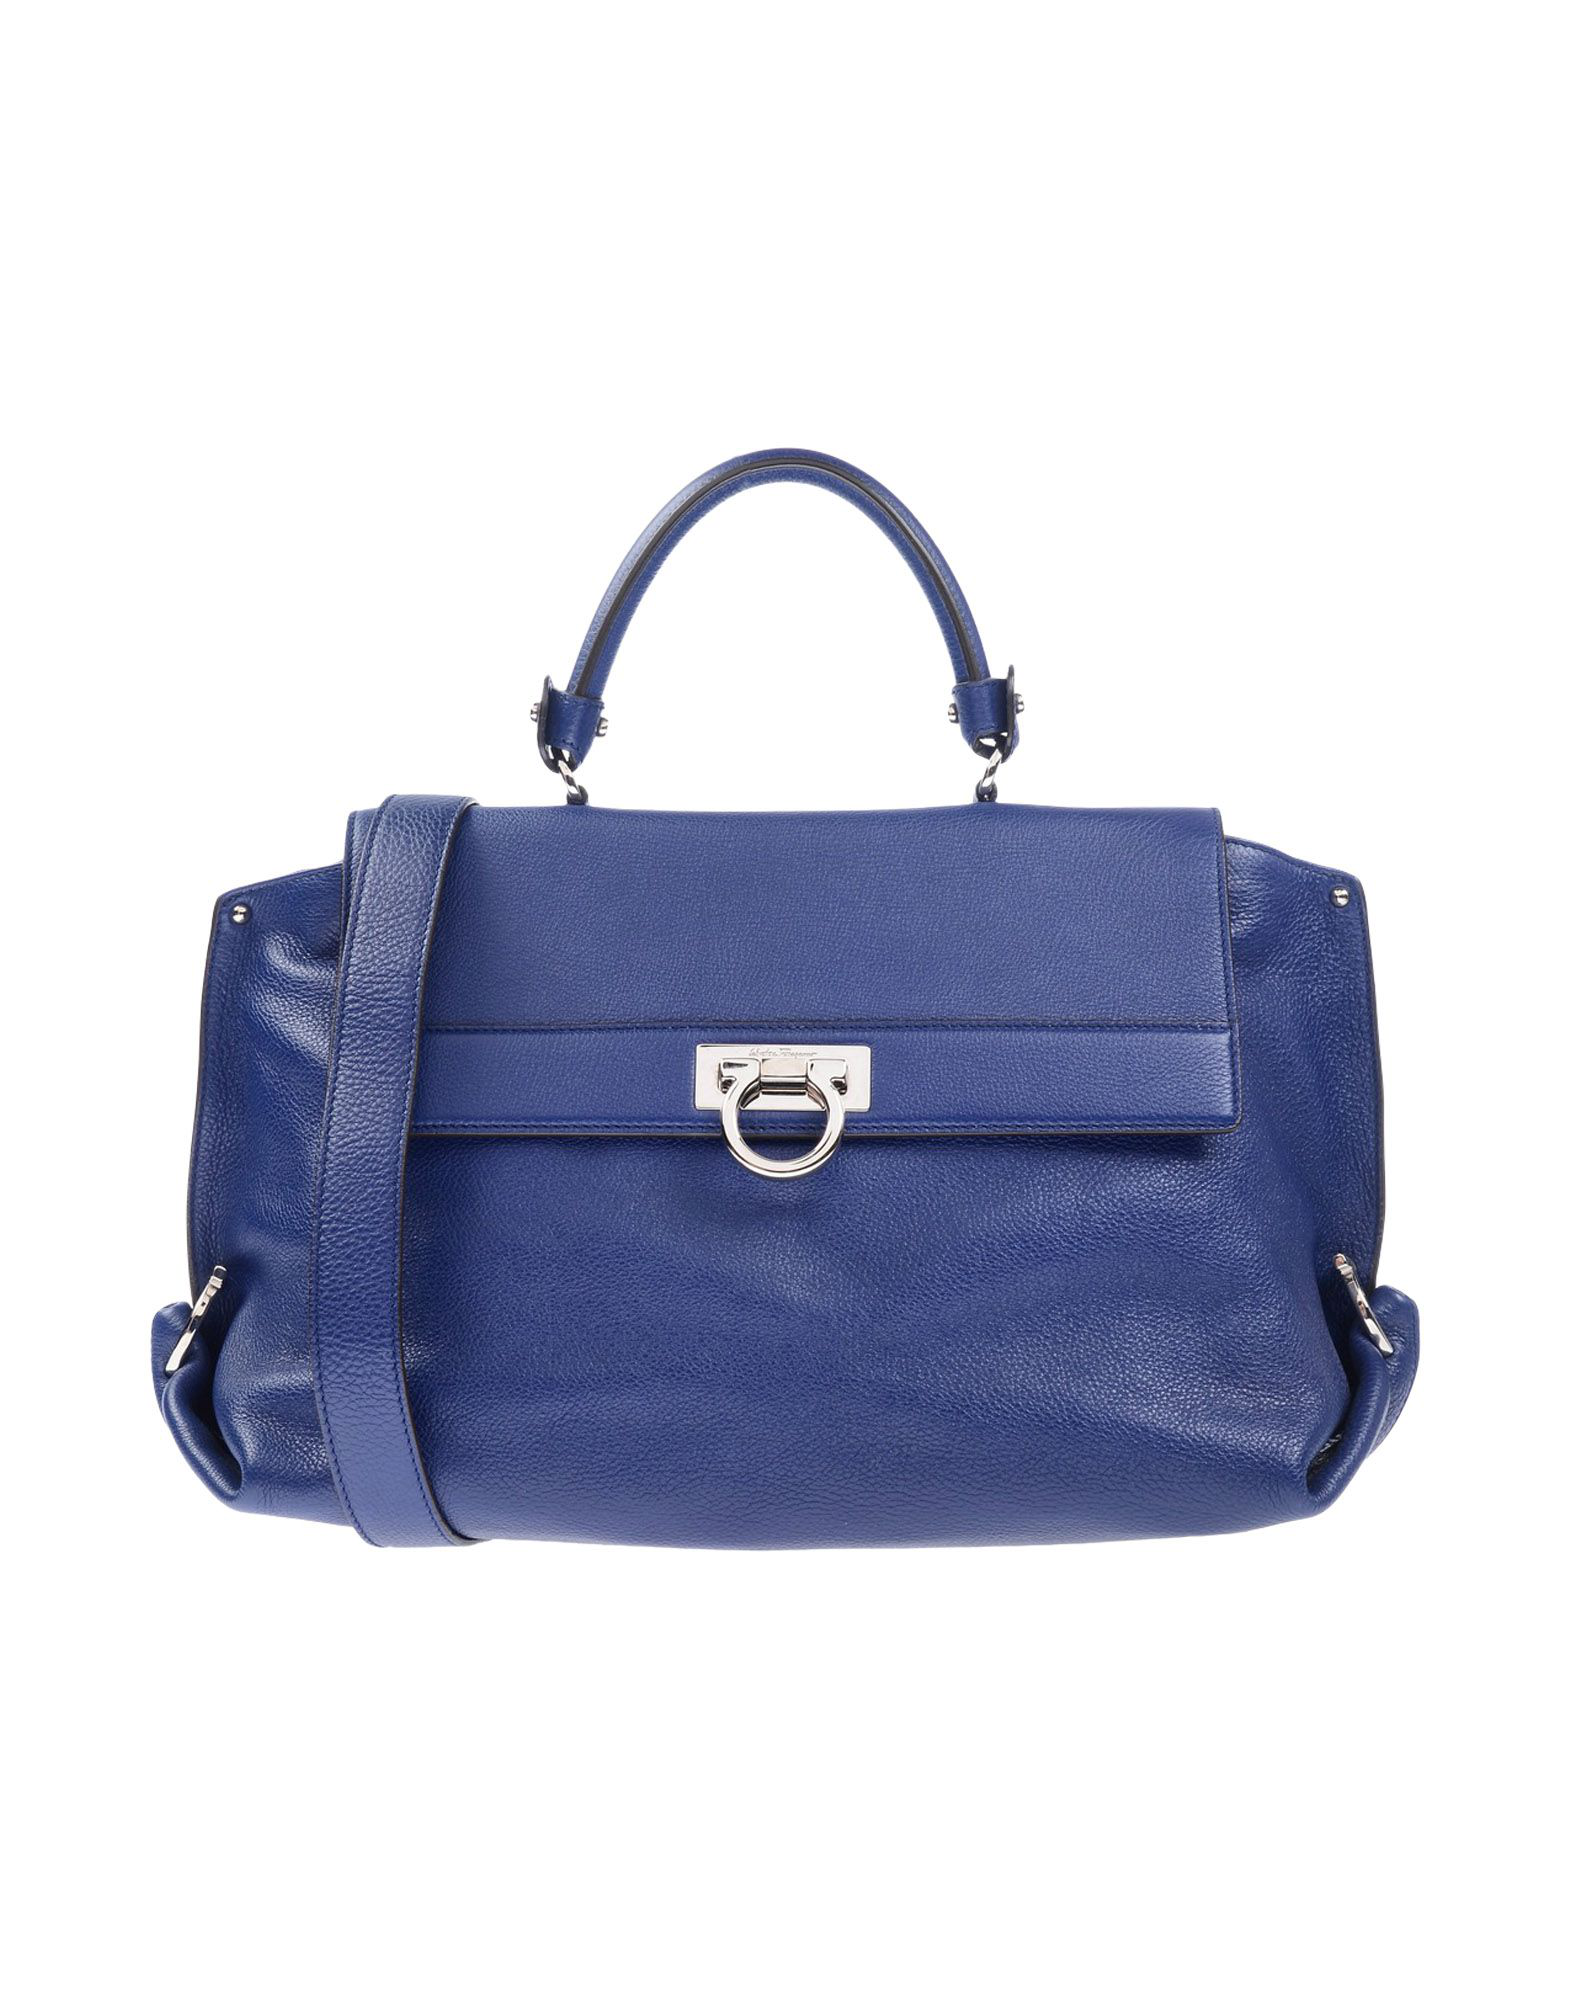 Salvatore Ferragamo Handbags In Blue | ModeSens